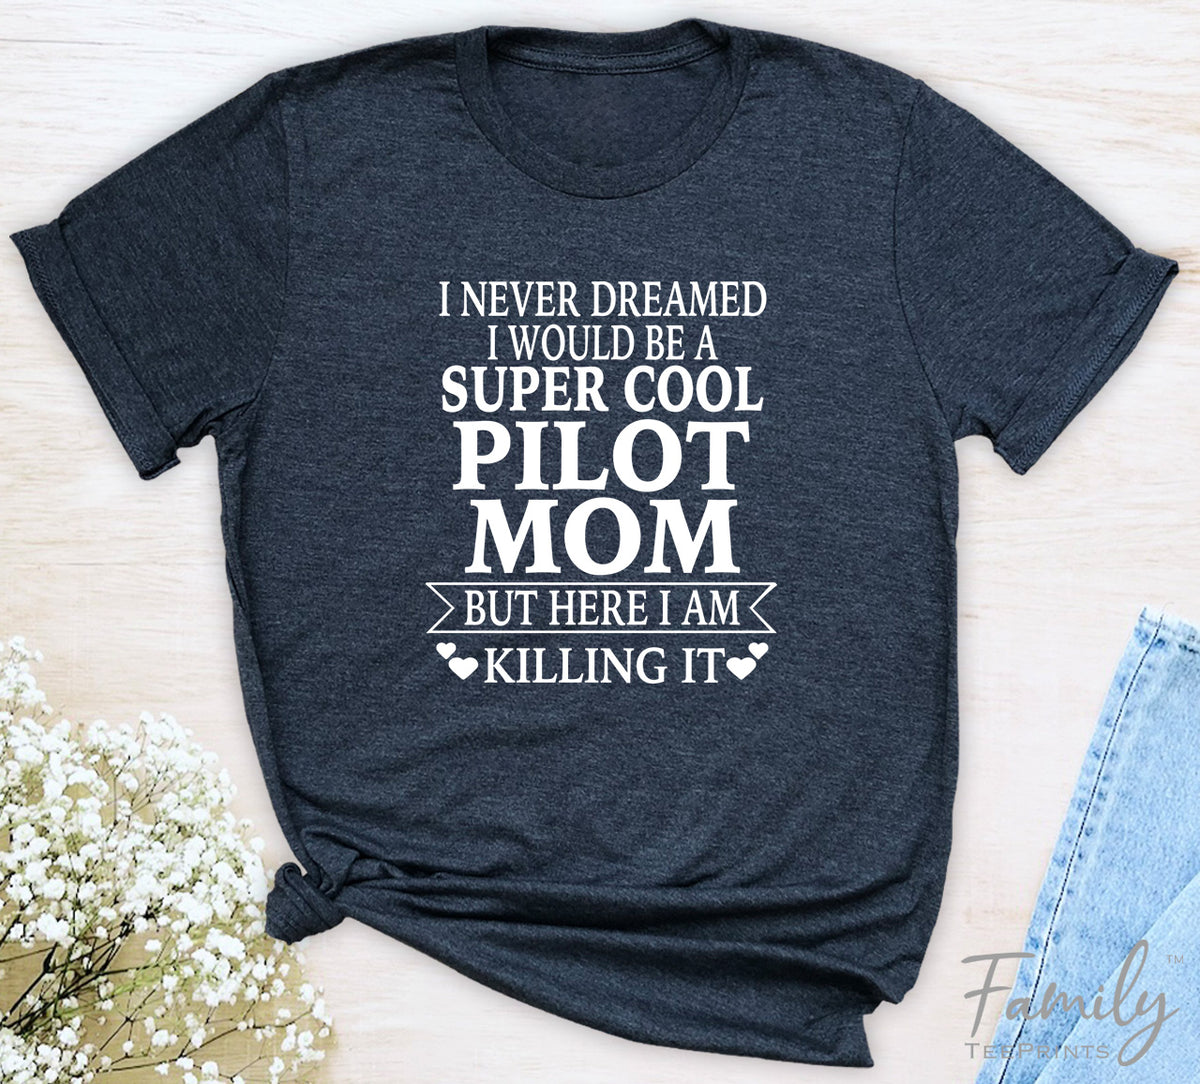 I Never Dreamed I'd Be A Super Cool Pilot Mom...- Unisex T-shirt - Pilot Mom Shirt - Gift For Pilot Mom - familyteeprints